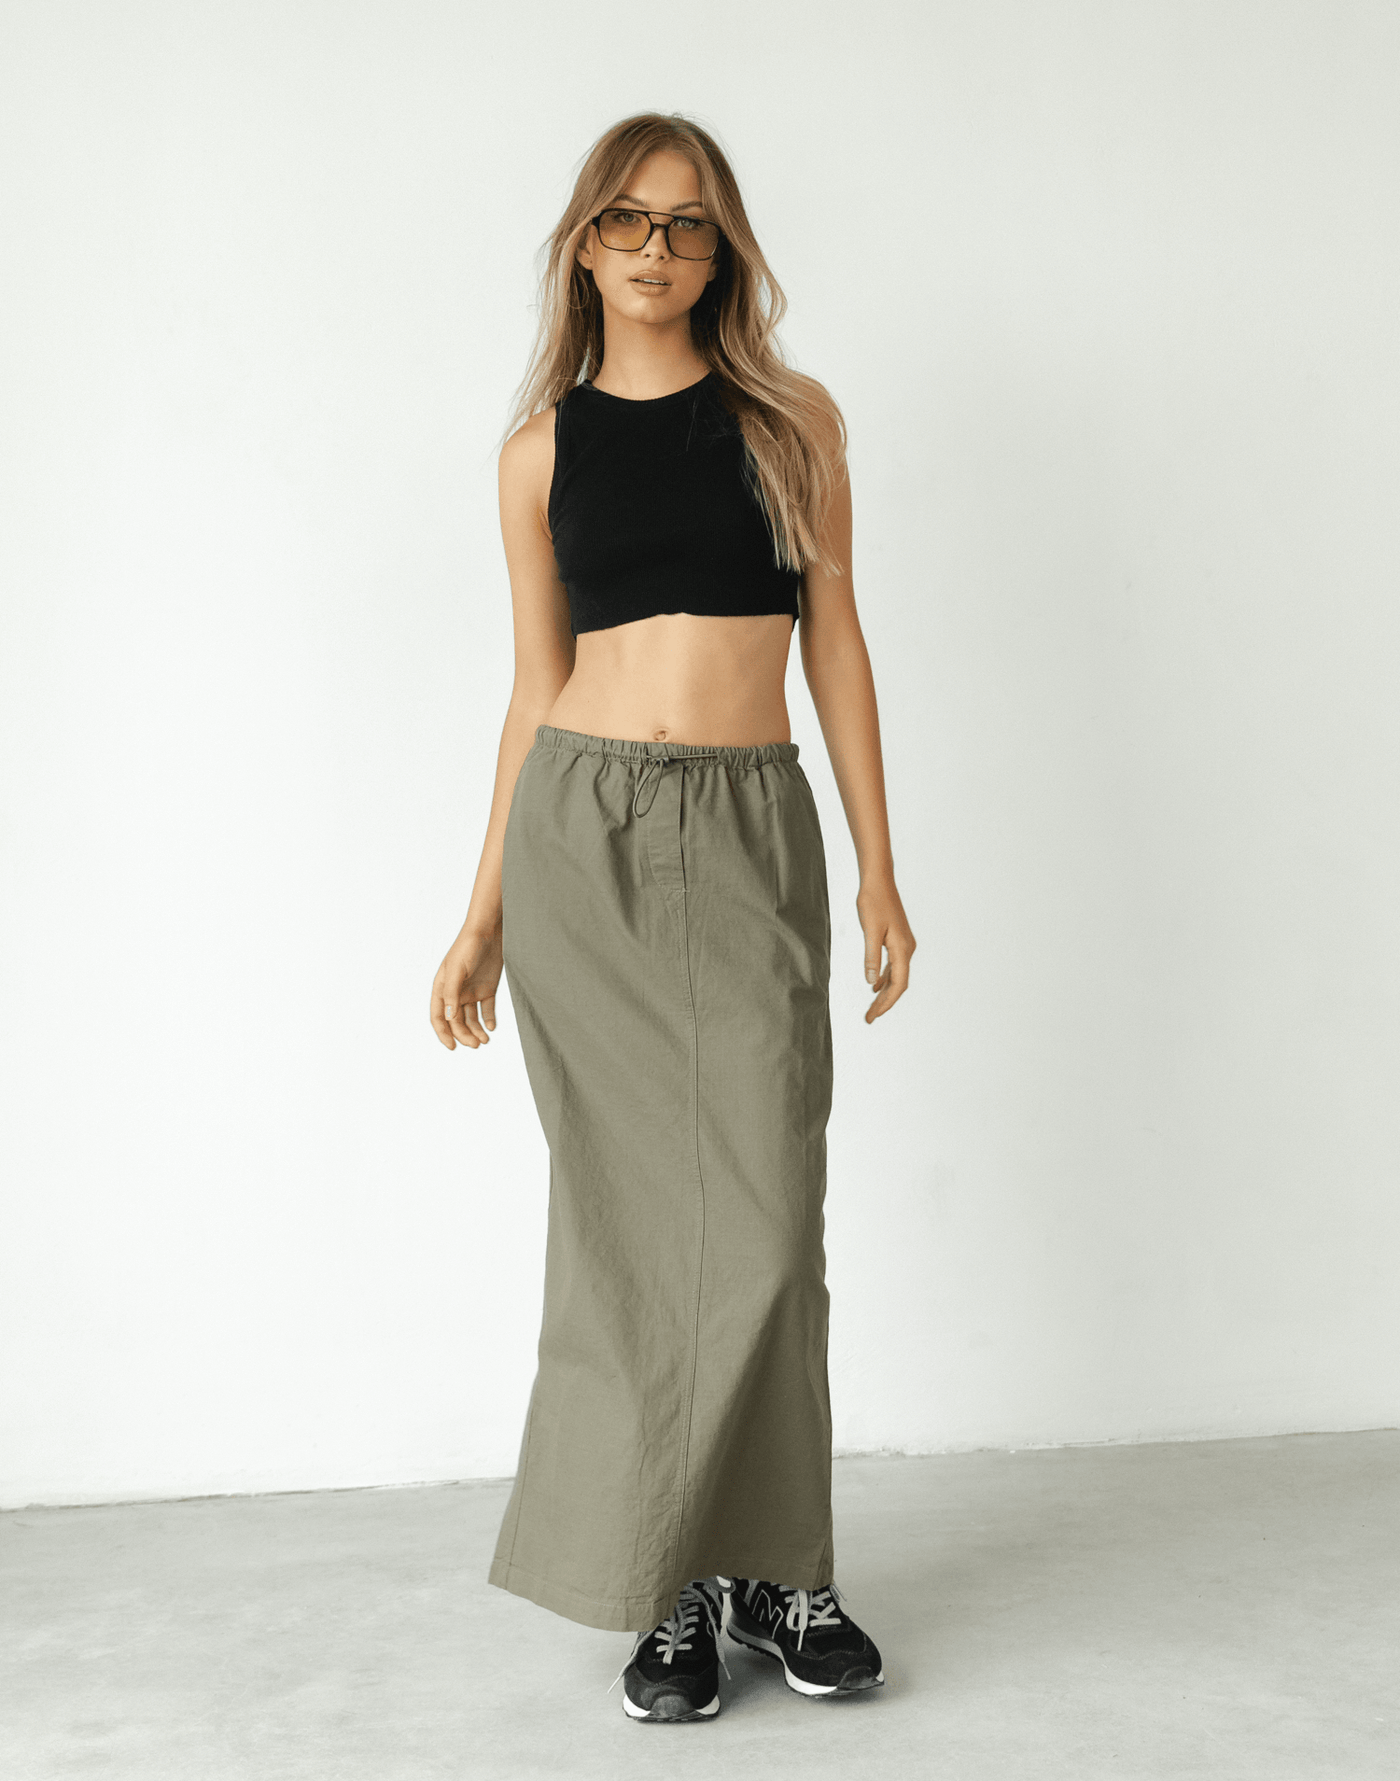 Myrtle Midi Skirt (Khaki) - Khaki Midi Skirt - Women's Skirts - Charcoal Clothing